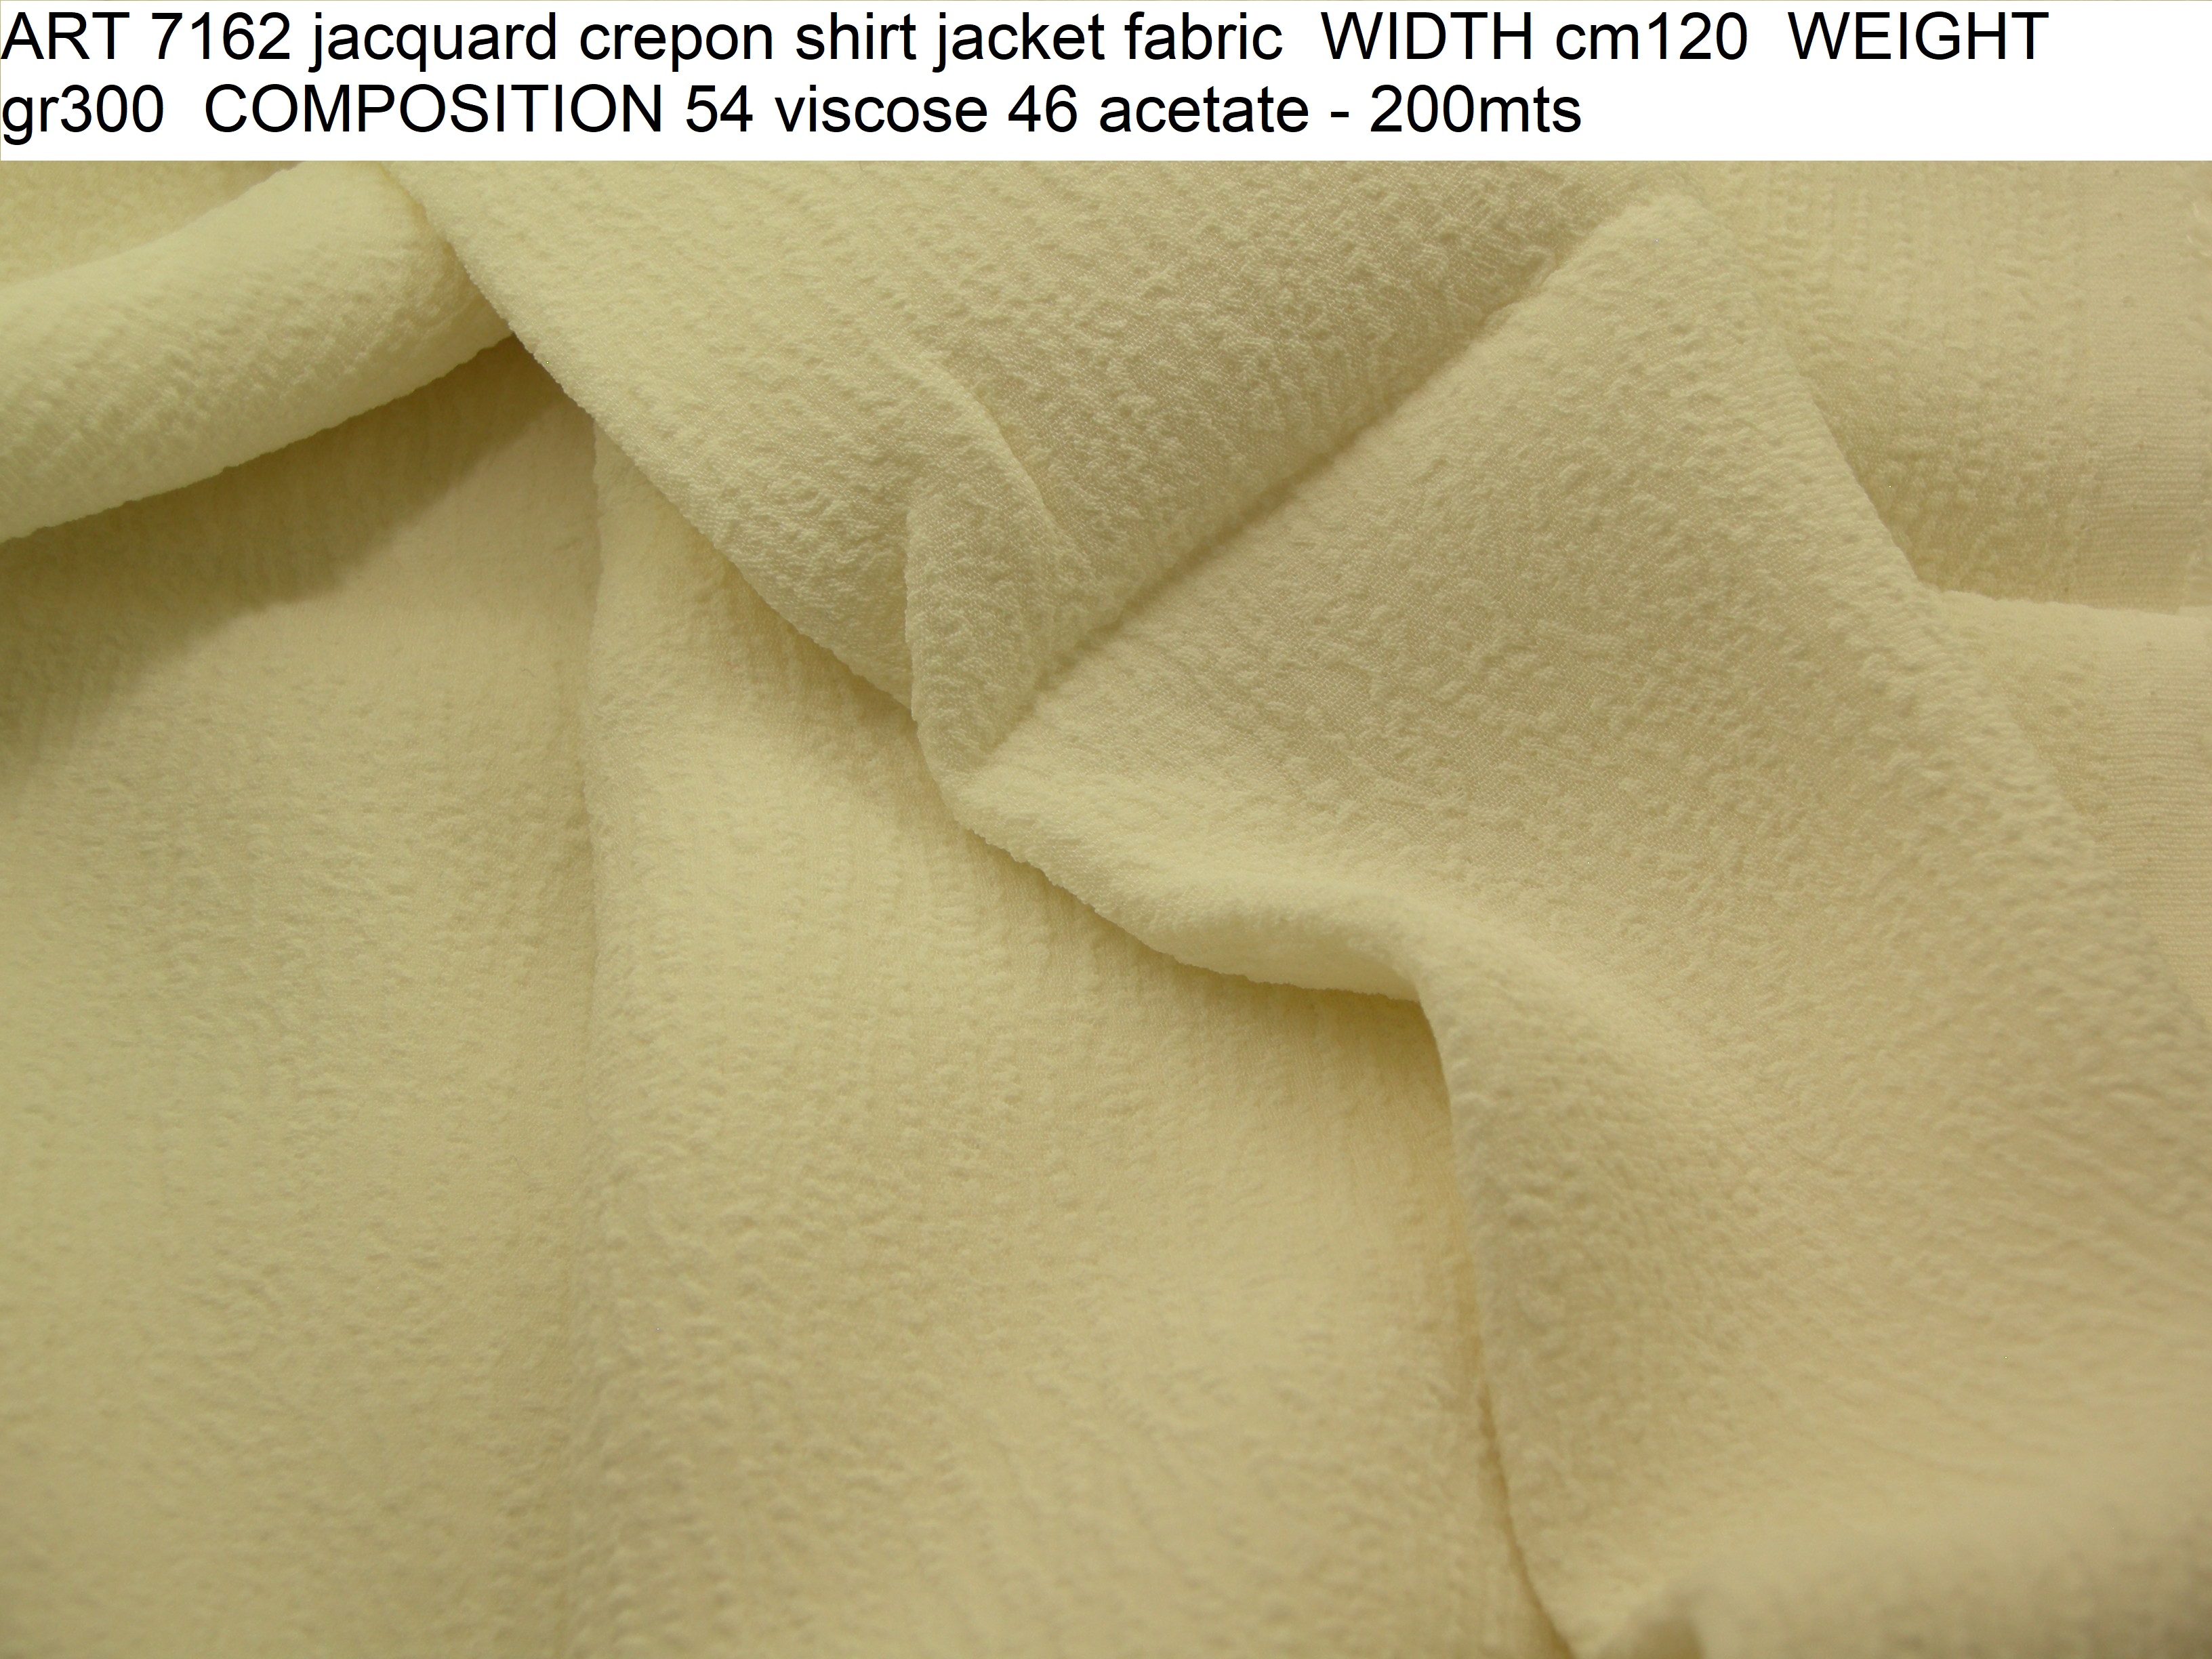 ART 7162 jacquard crepon shirt jacket fabric WIDTH cm120 WEIGHT gr300 COMPOSITION 54 viscose 46 acetate - 200mts